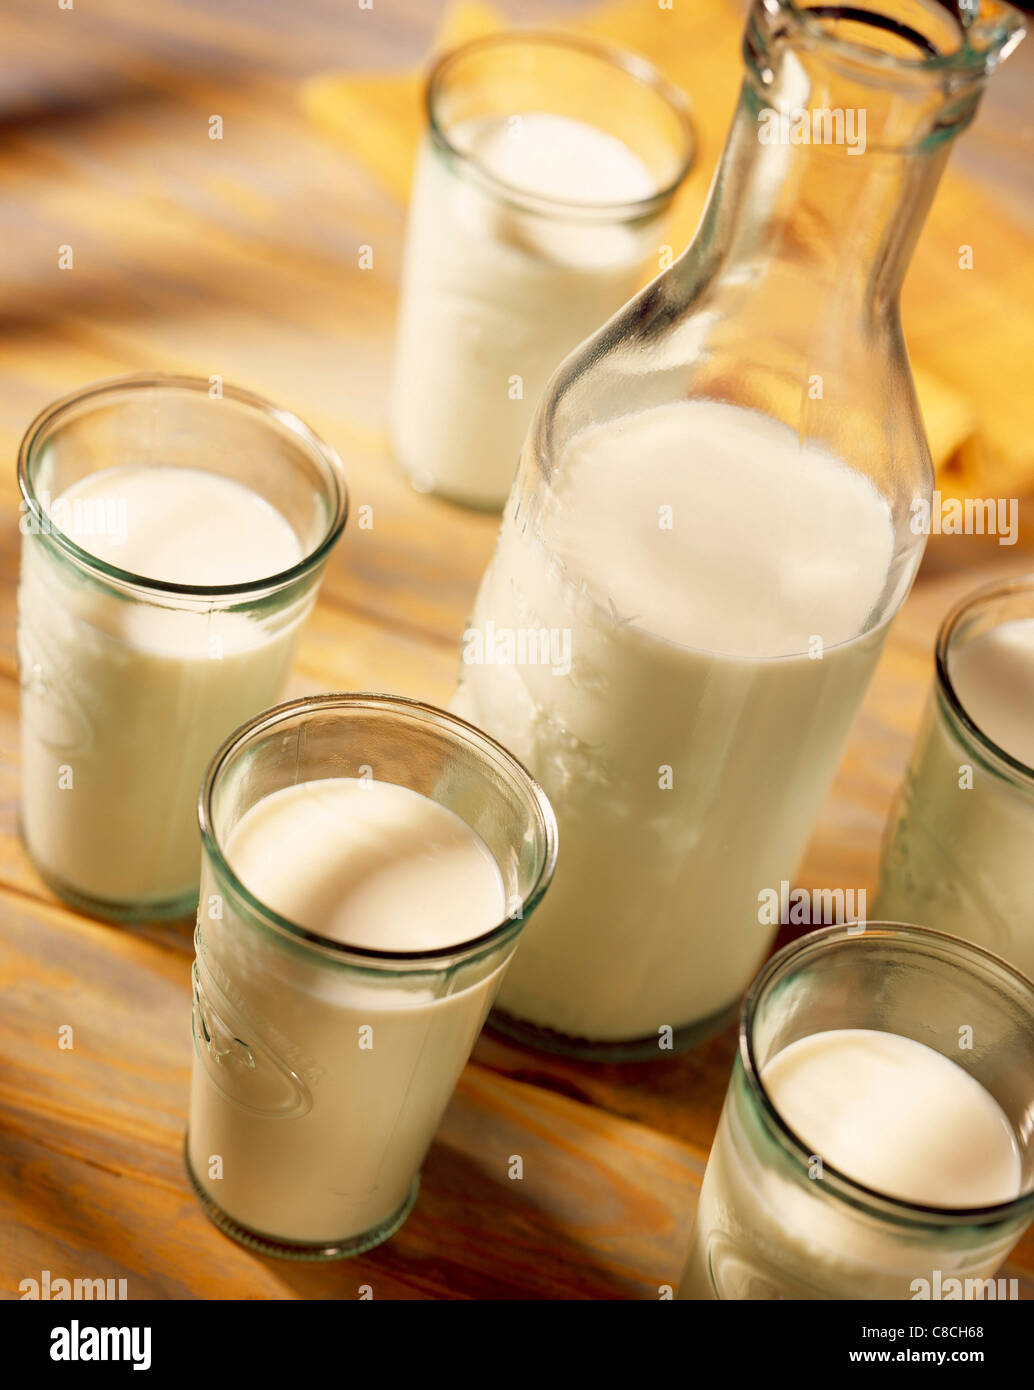 glasses of milk and bottle of milk Stock Photo